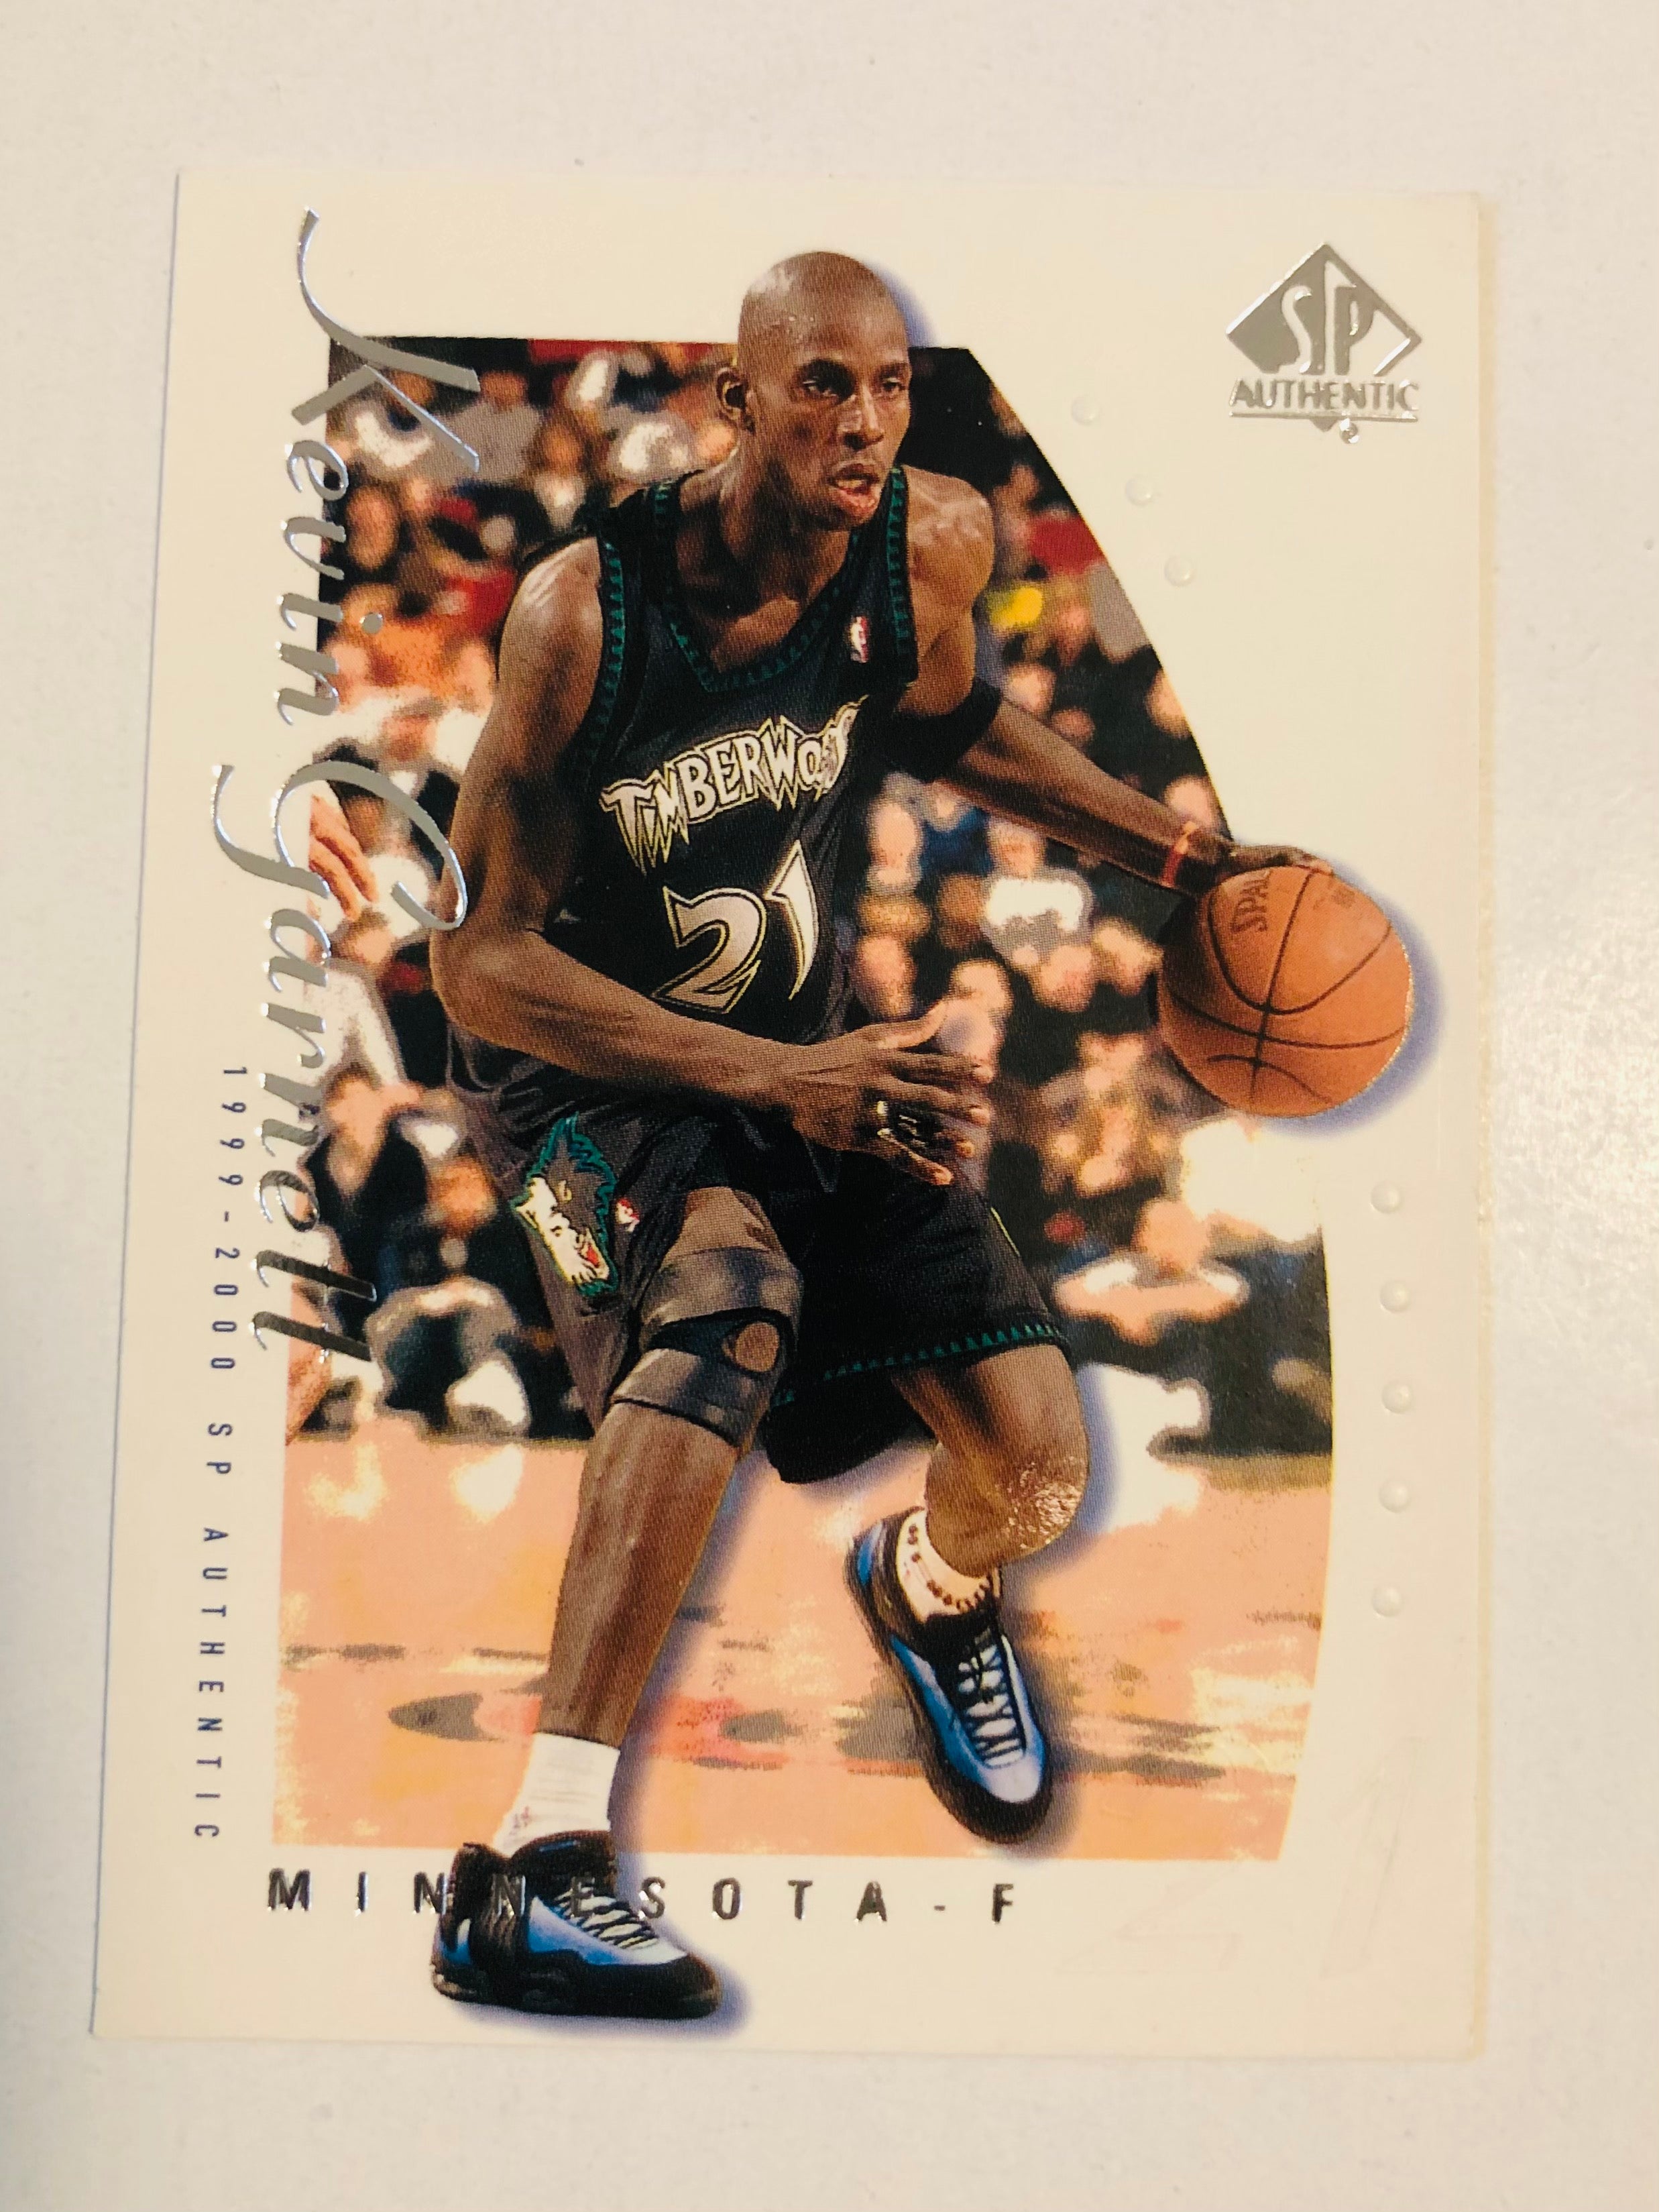 Kevin Garnett rare sp upper Deck preview stamped basketball card 2000